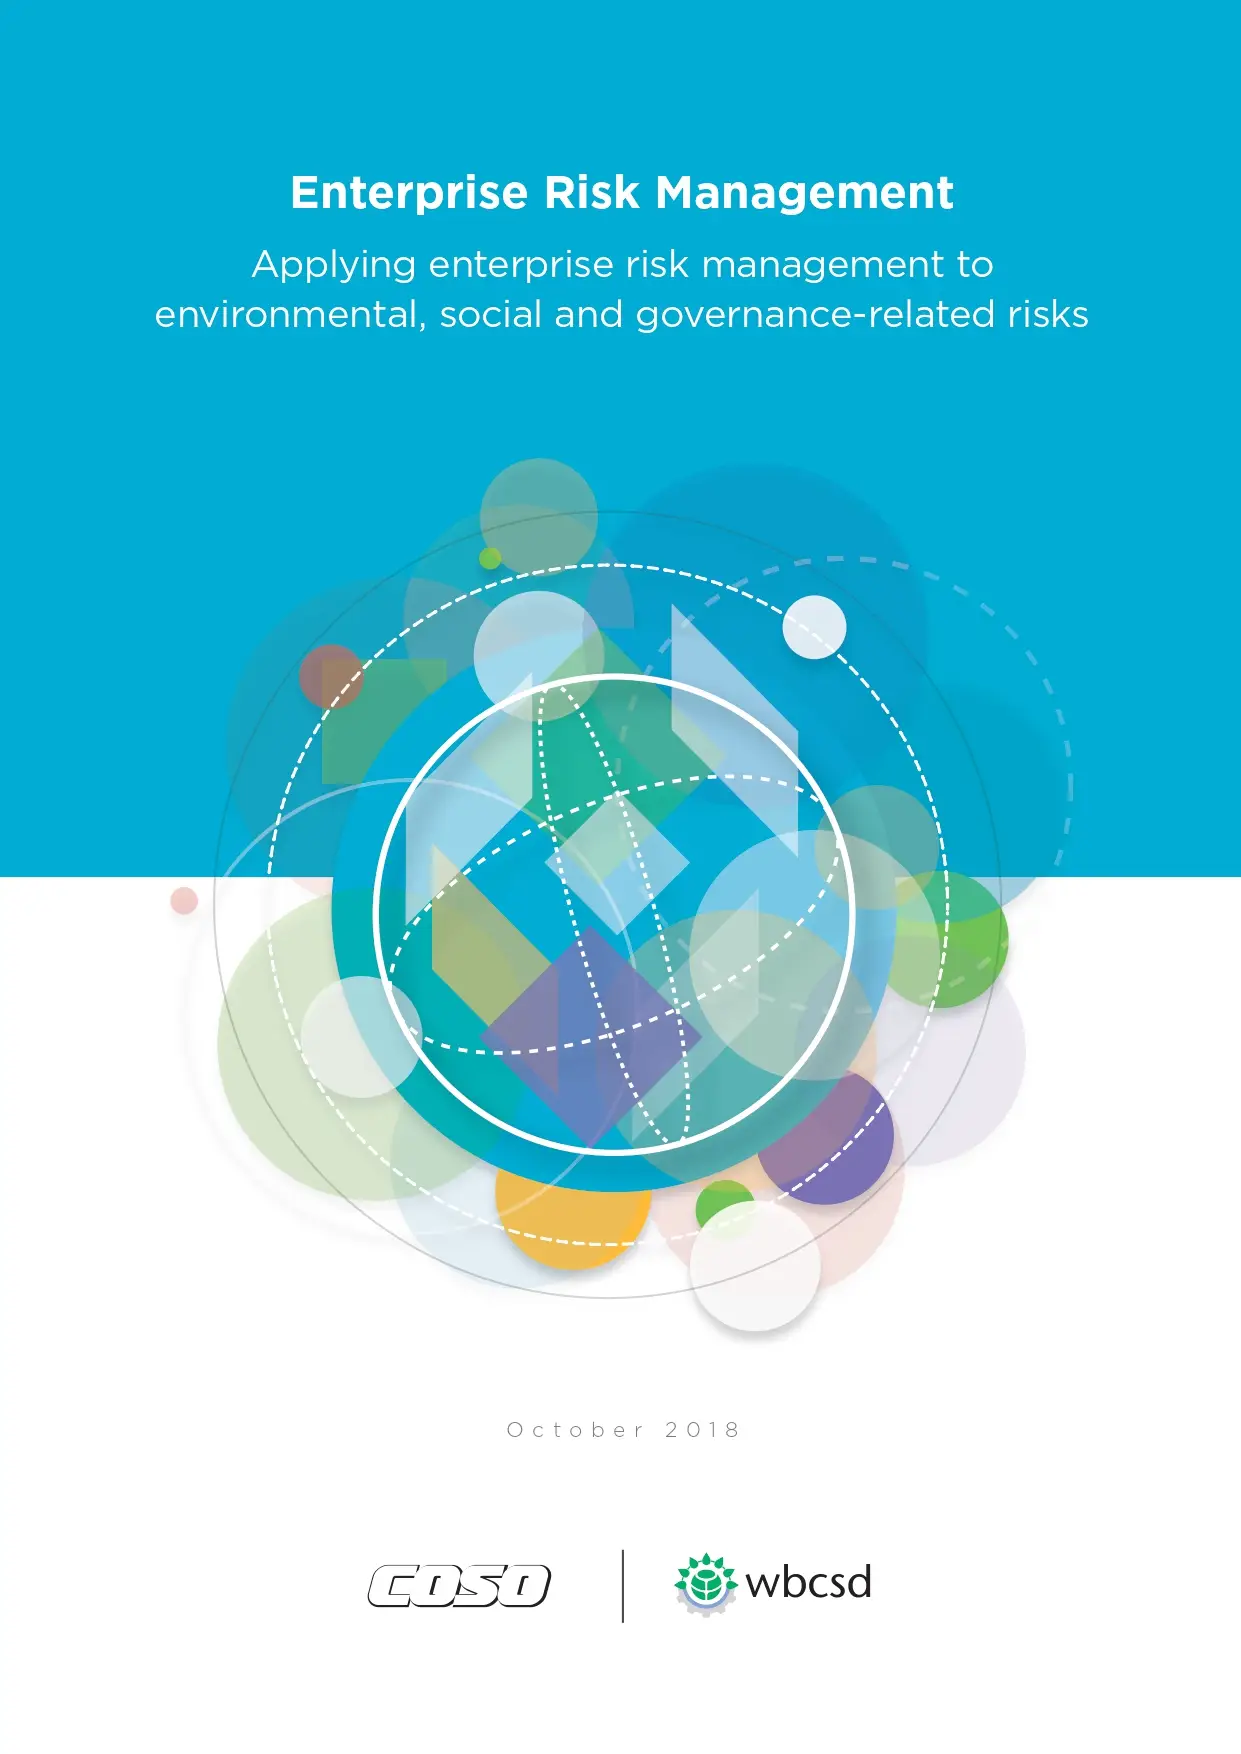 Enterprise Risk Management: Applying Enterprise Risk Management To Environmental, Social And Governance-Related Risks